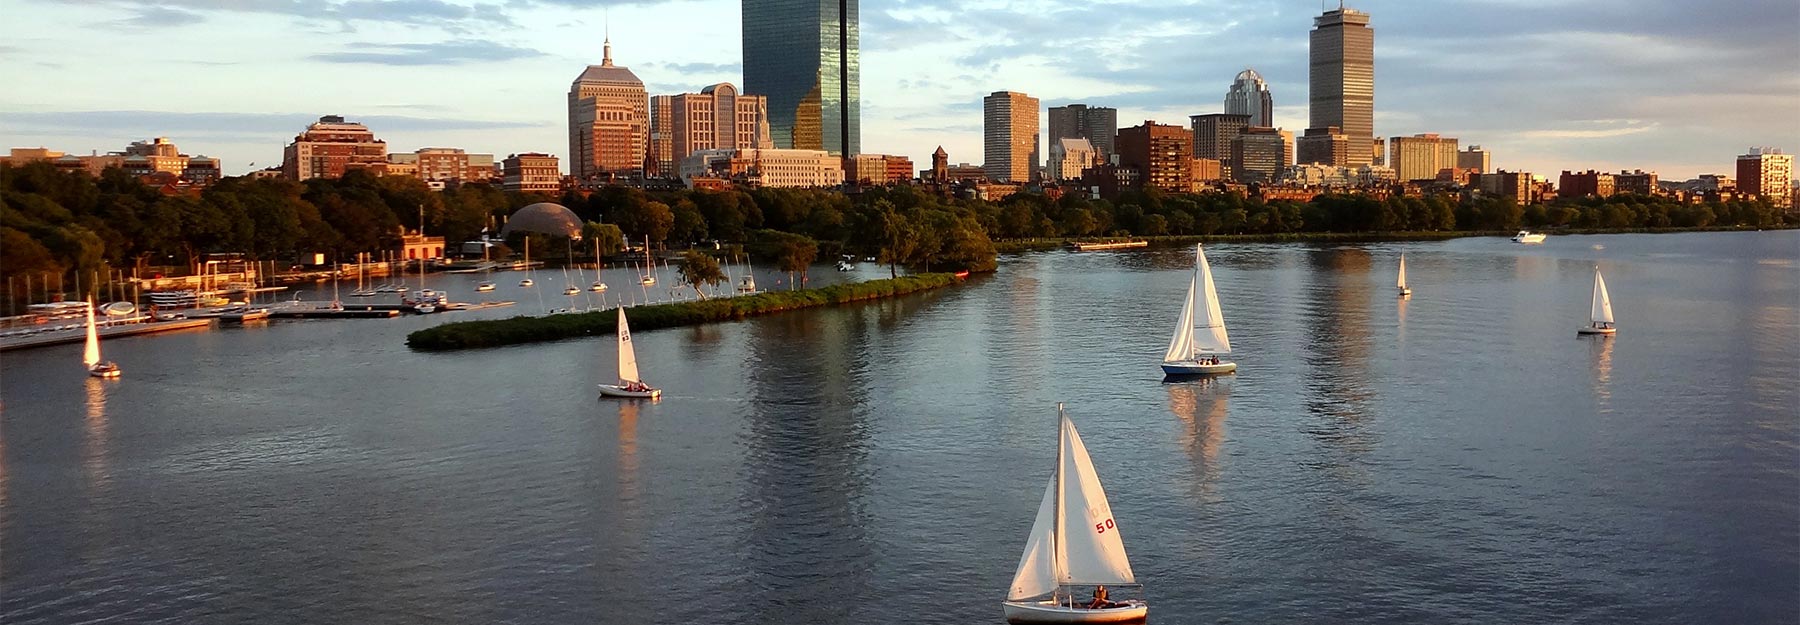 Charles River Boston, MA